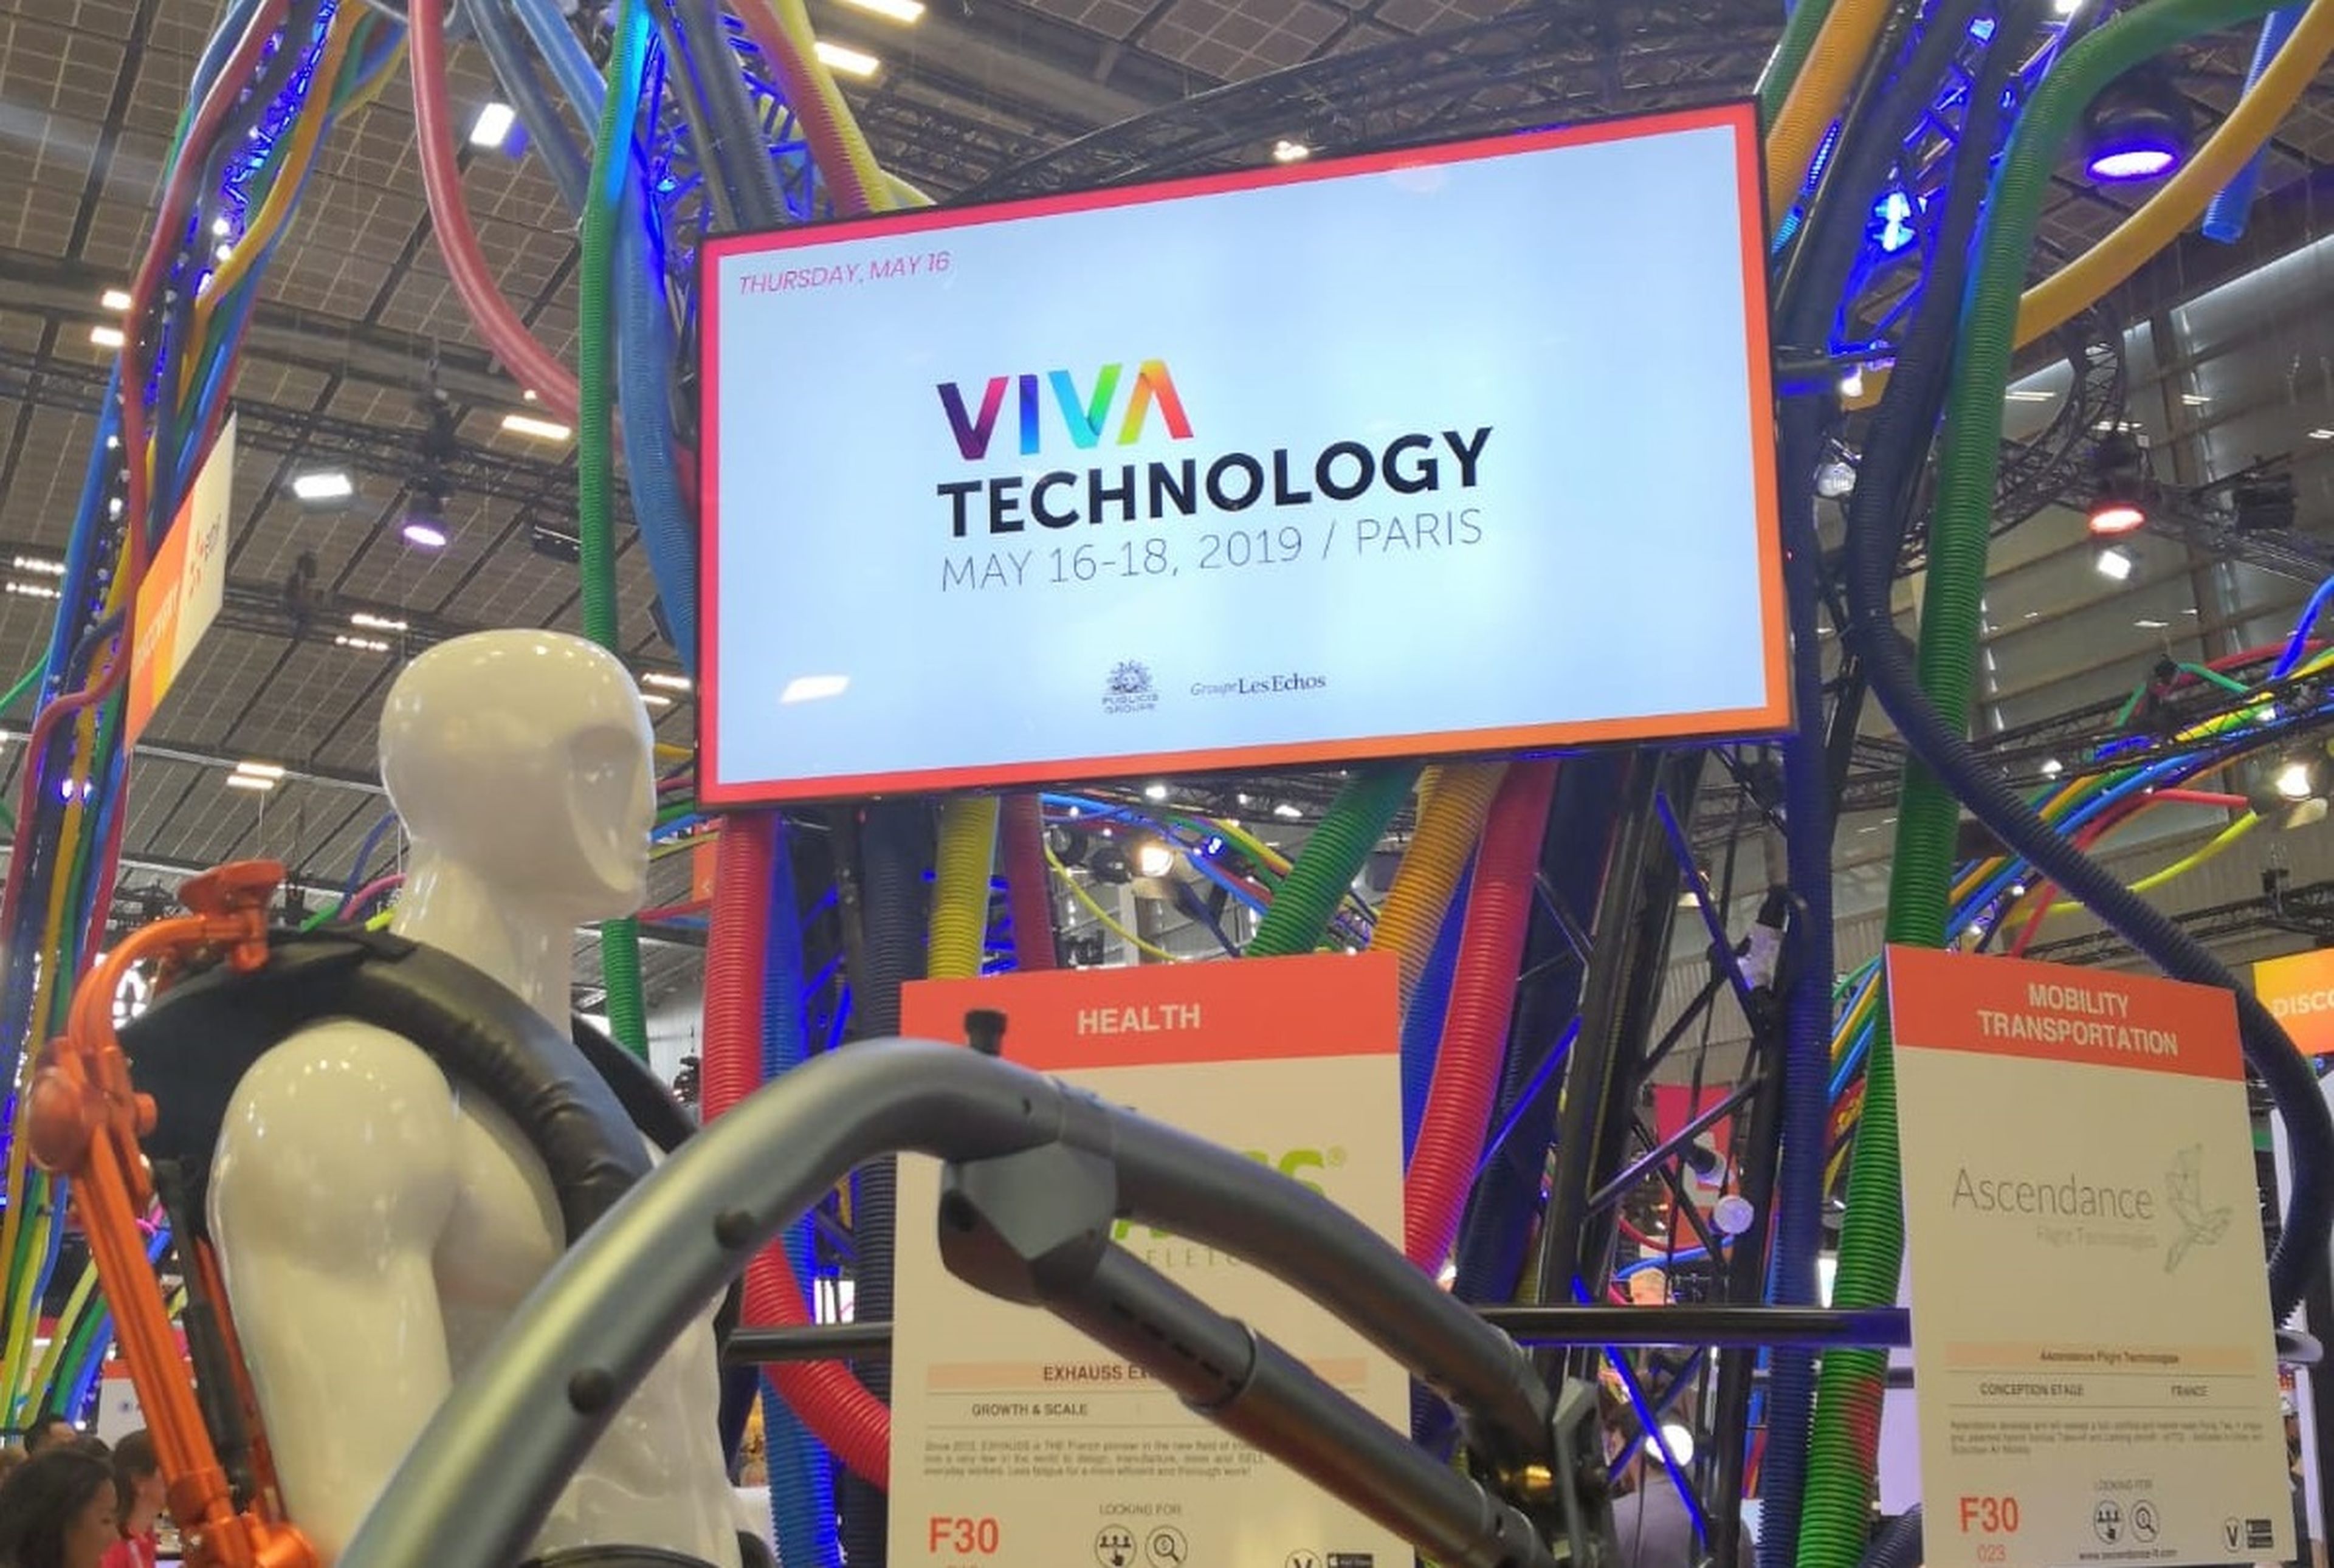 VIVA Technology 2019